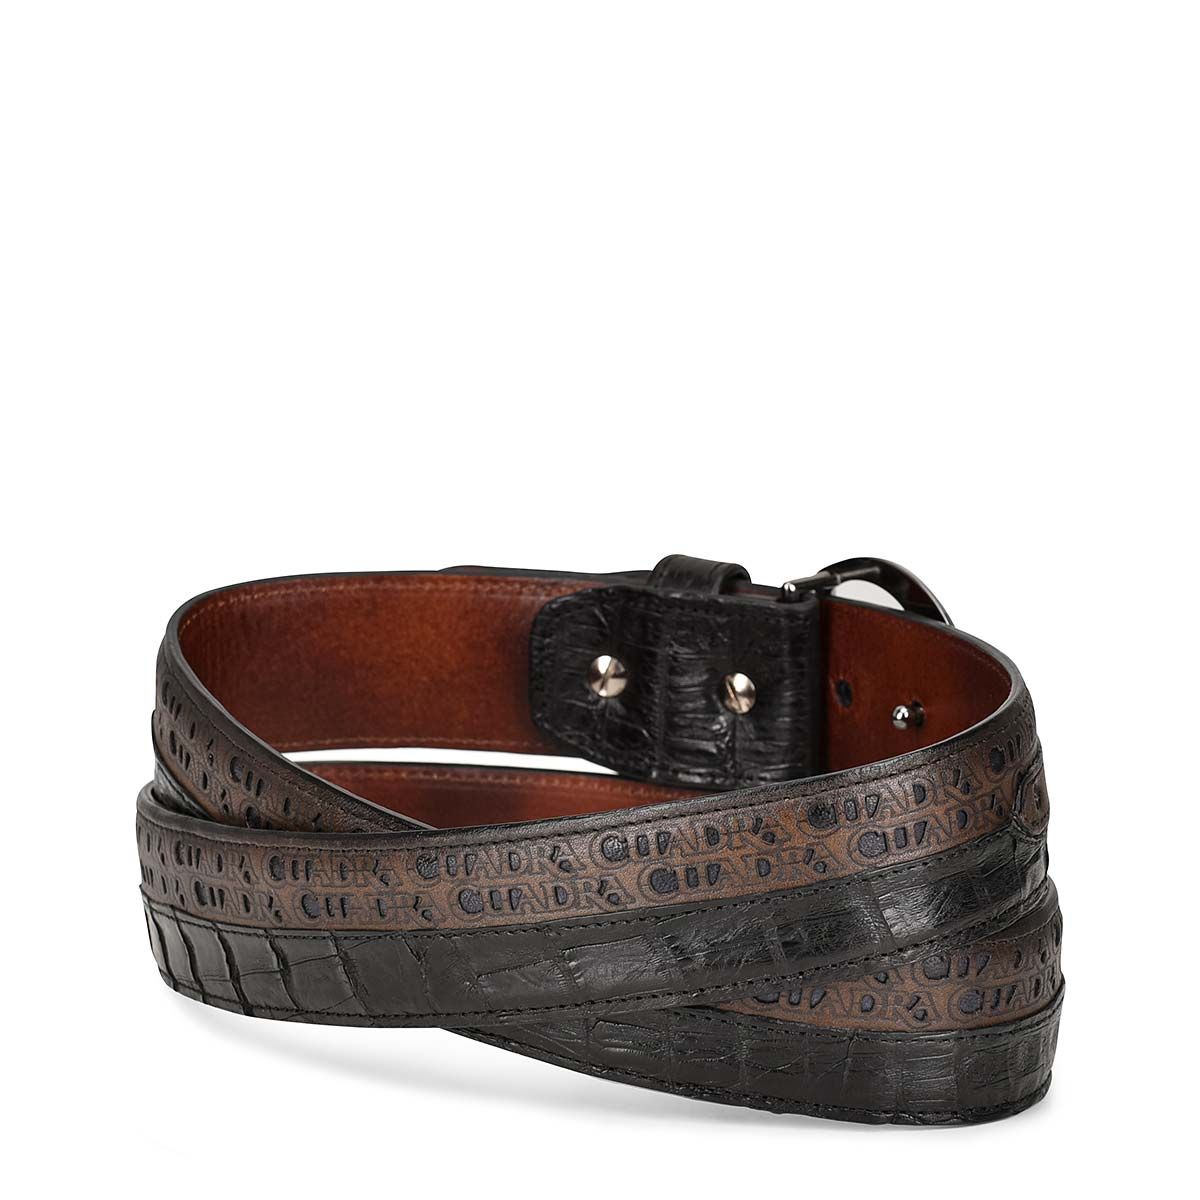 Engraved exotic bi-tone leather belt